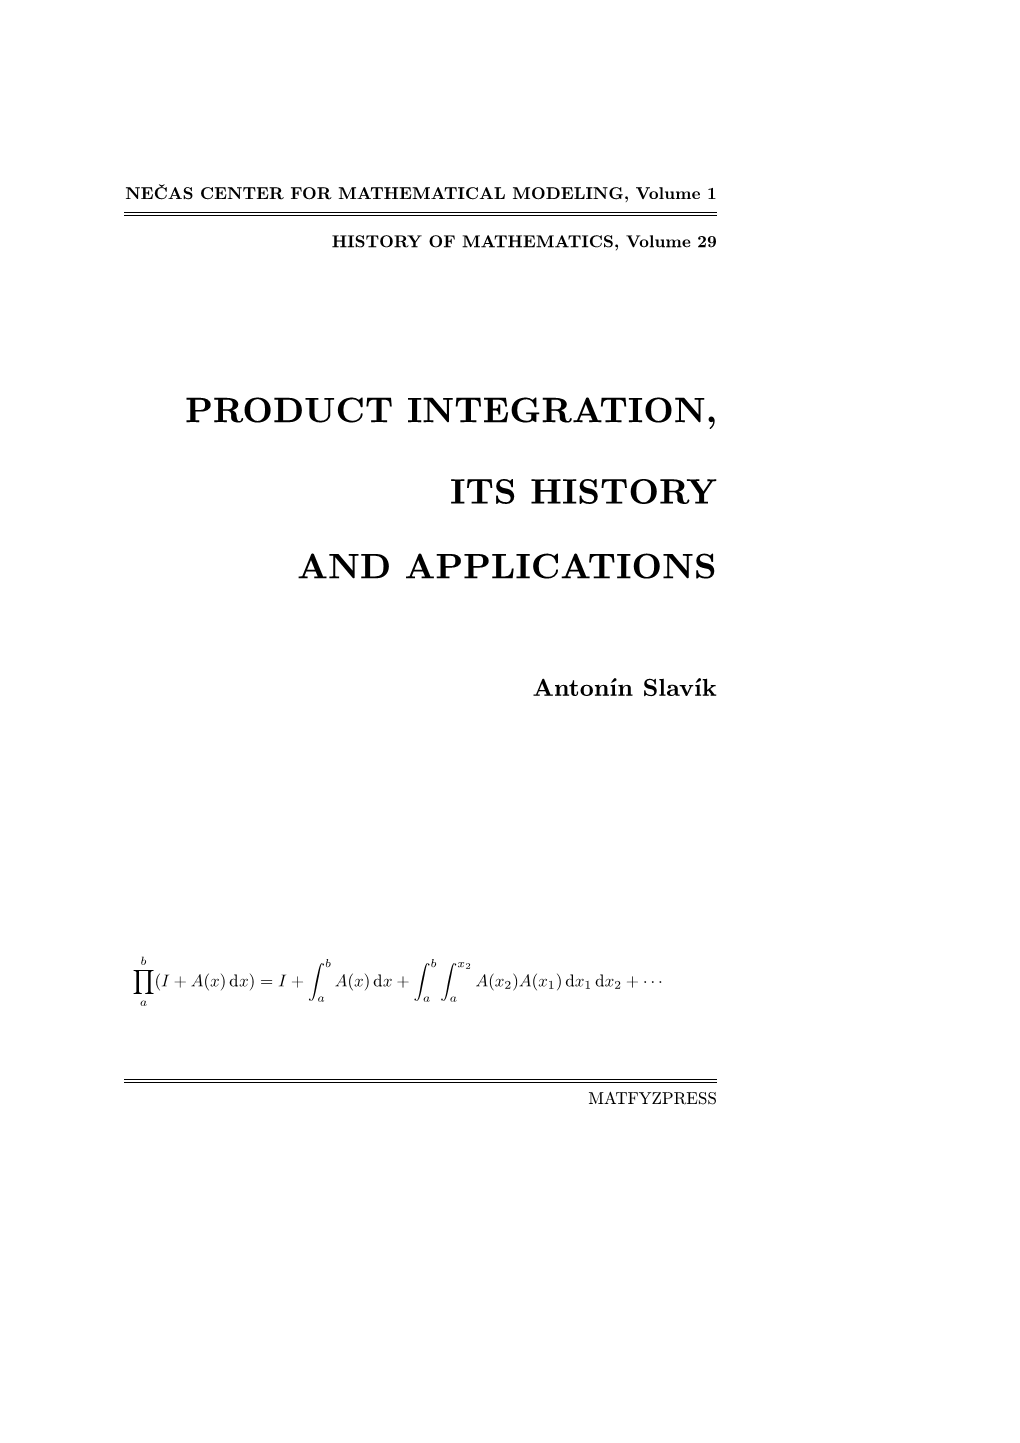 Product Integration, Its History and Applications, 2007 (Engl.) Antonín Slavík